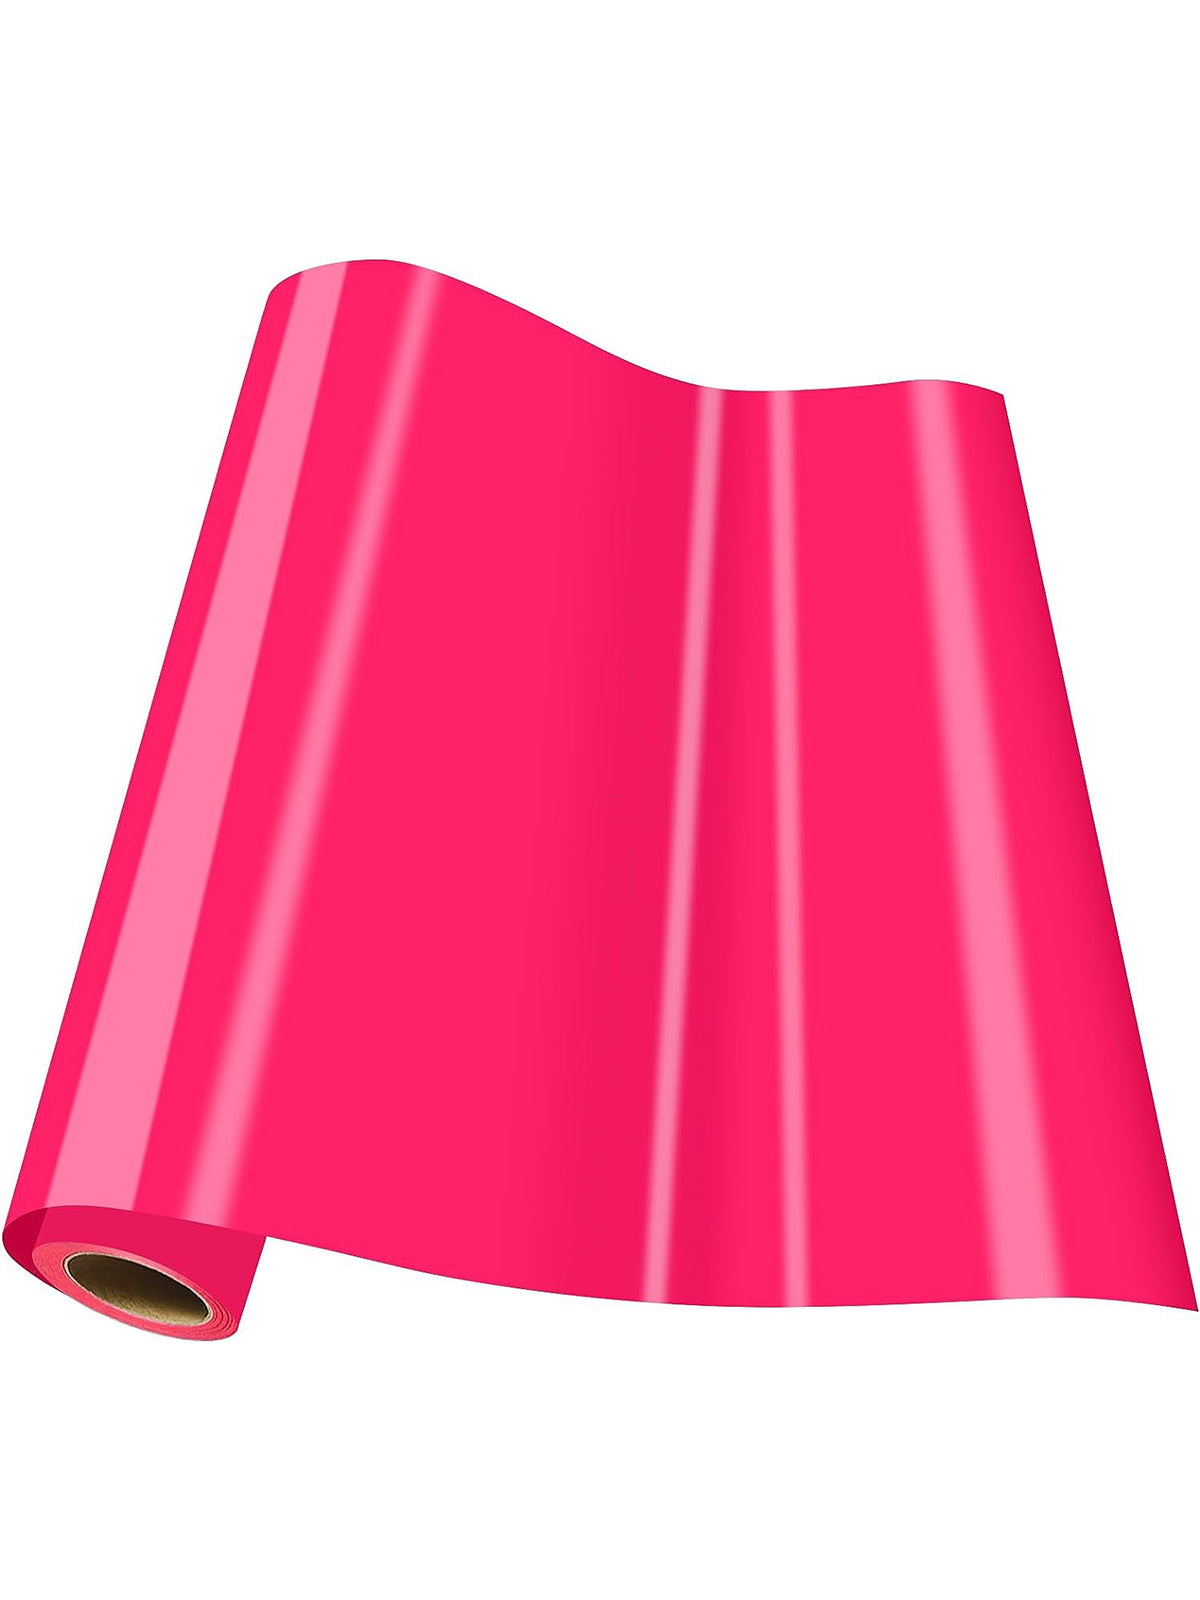 CenDale 3D Puff Vinyl Heat Transfer - Pink Puff Vinyl Roll 10''x 5FT